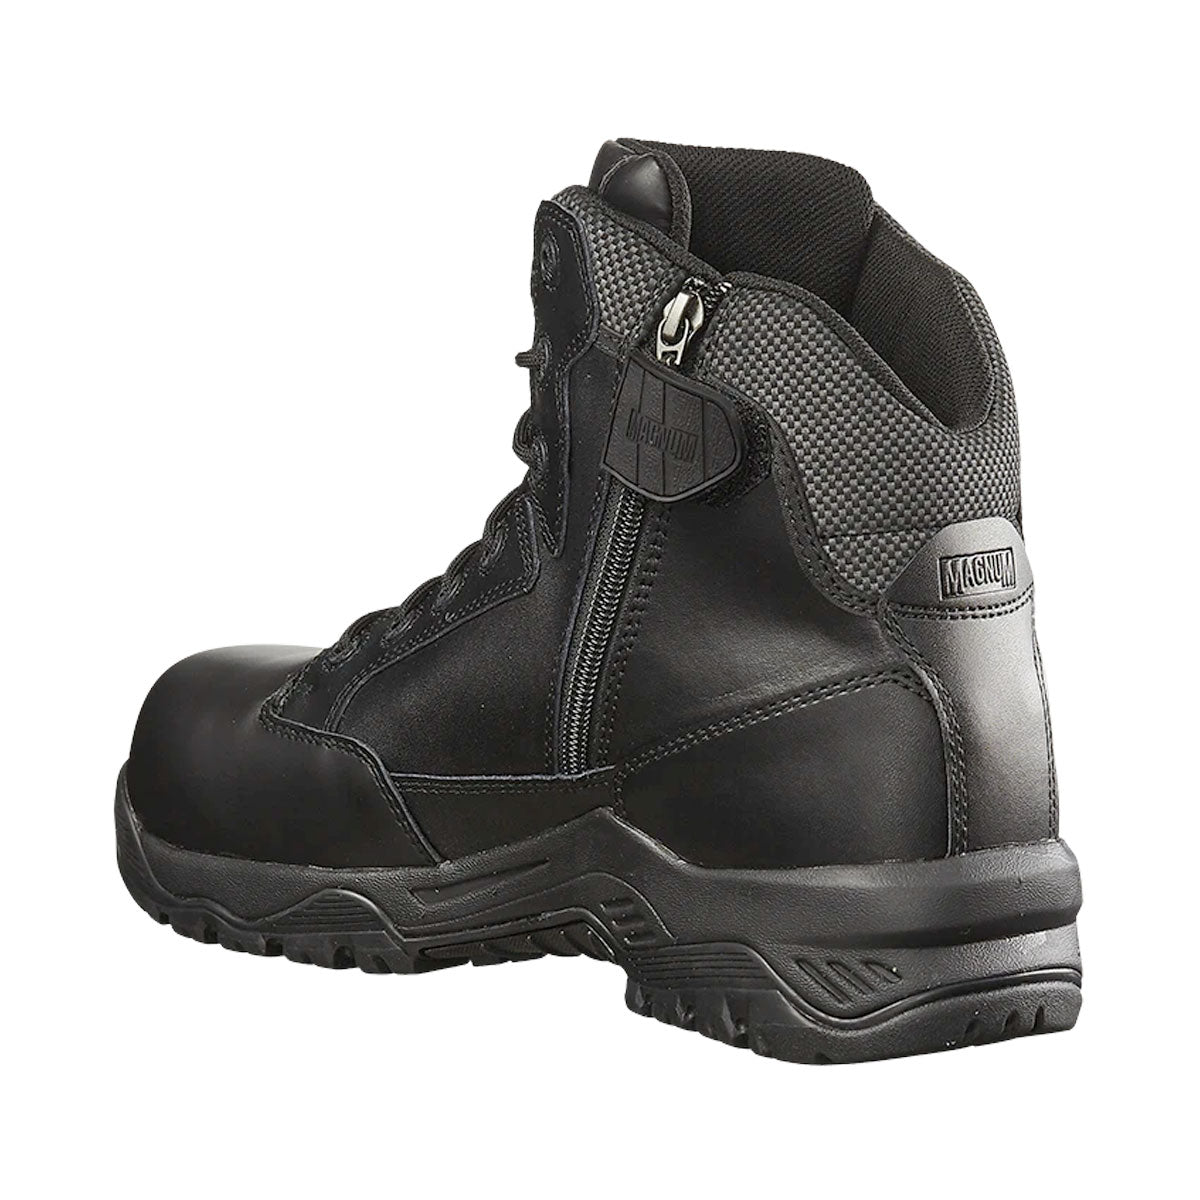 Magnum Strike Force 6.0 Leather Side-Zip Composite Toe Women's Boot Black Footwear Magnum Footwear Tactical Gear Supplier Tactical Distributors Australia